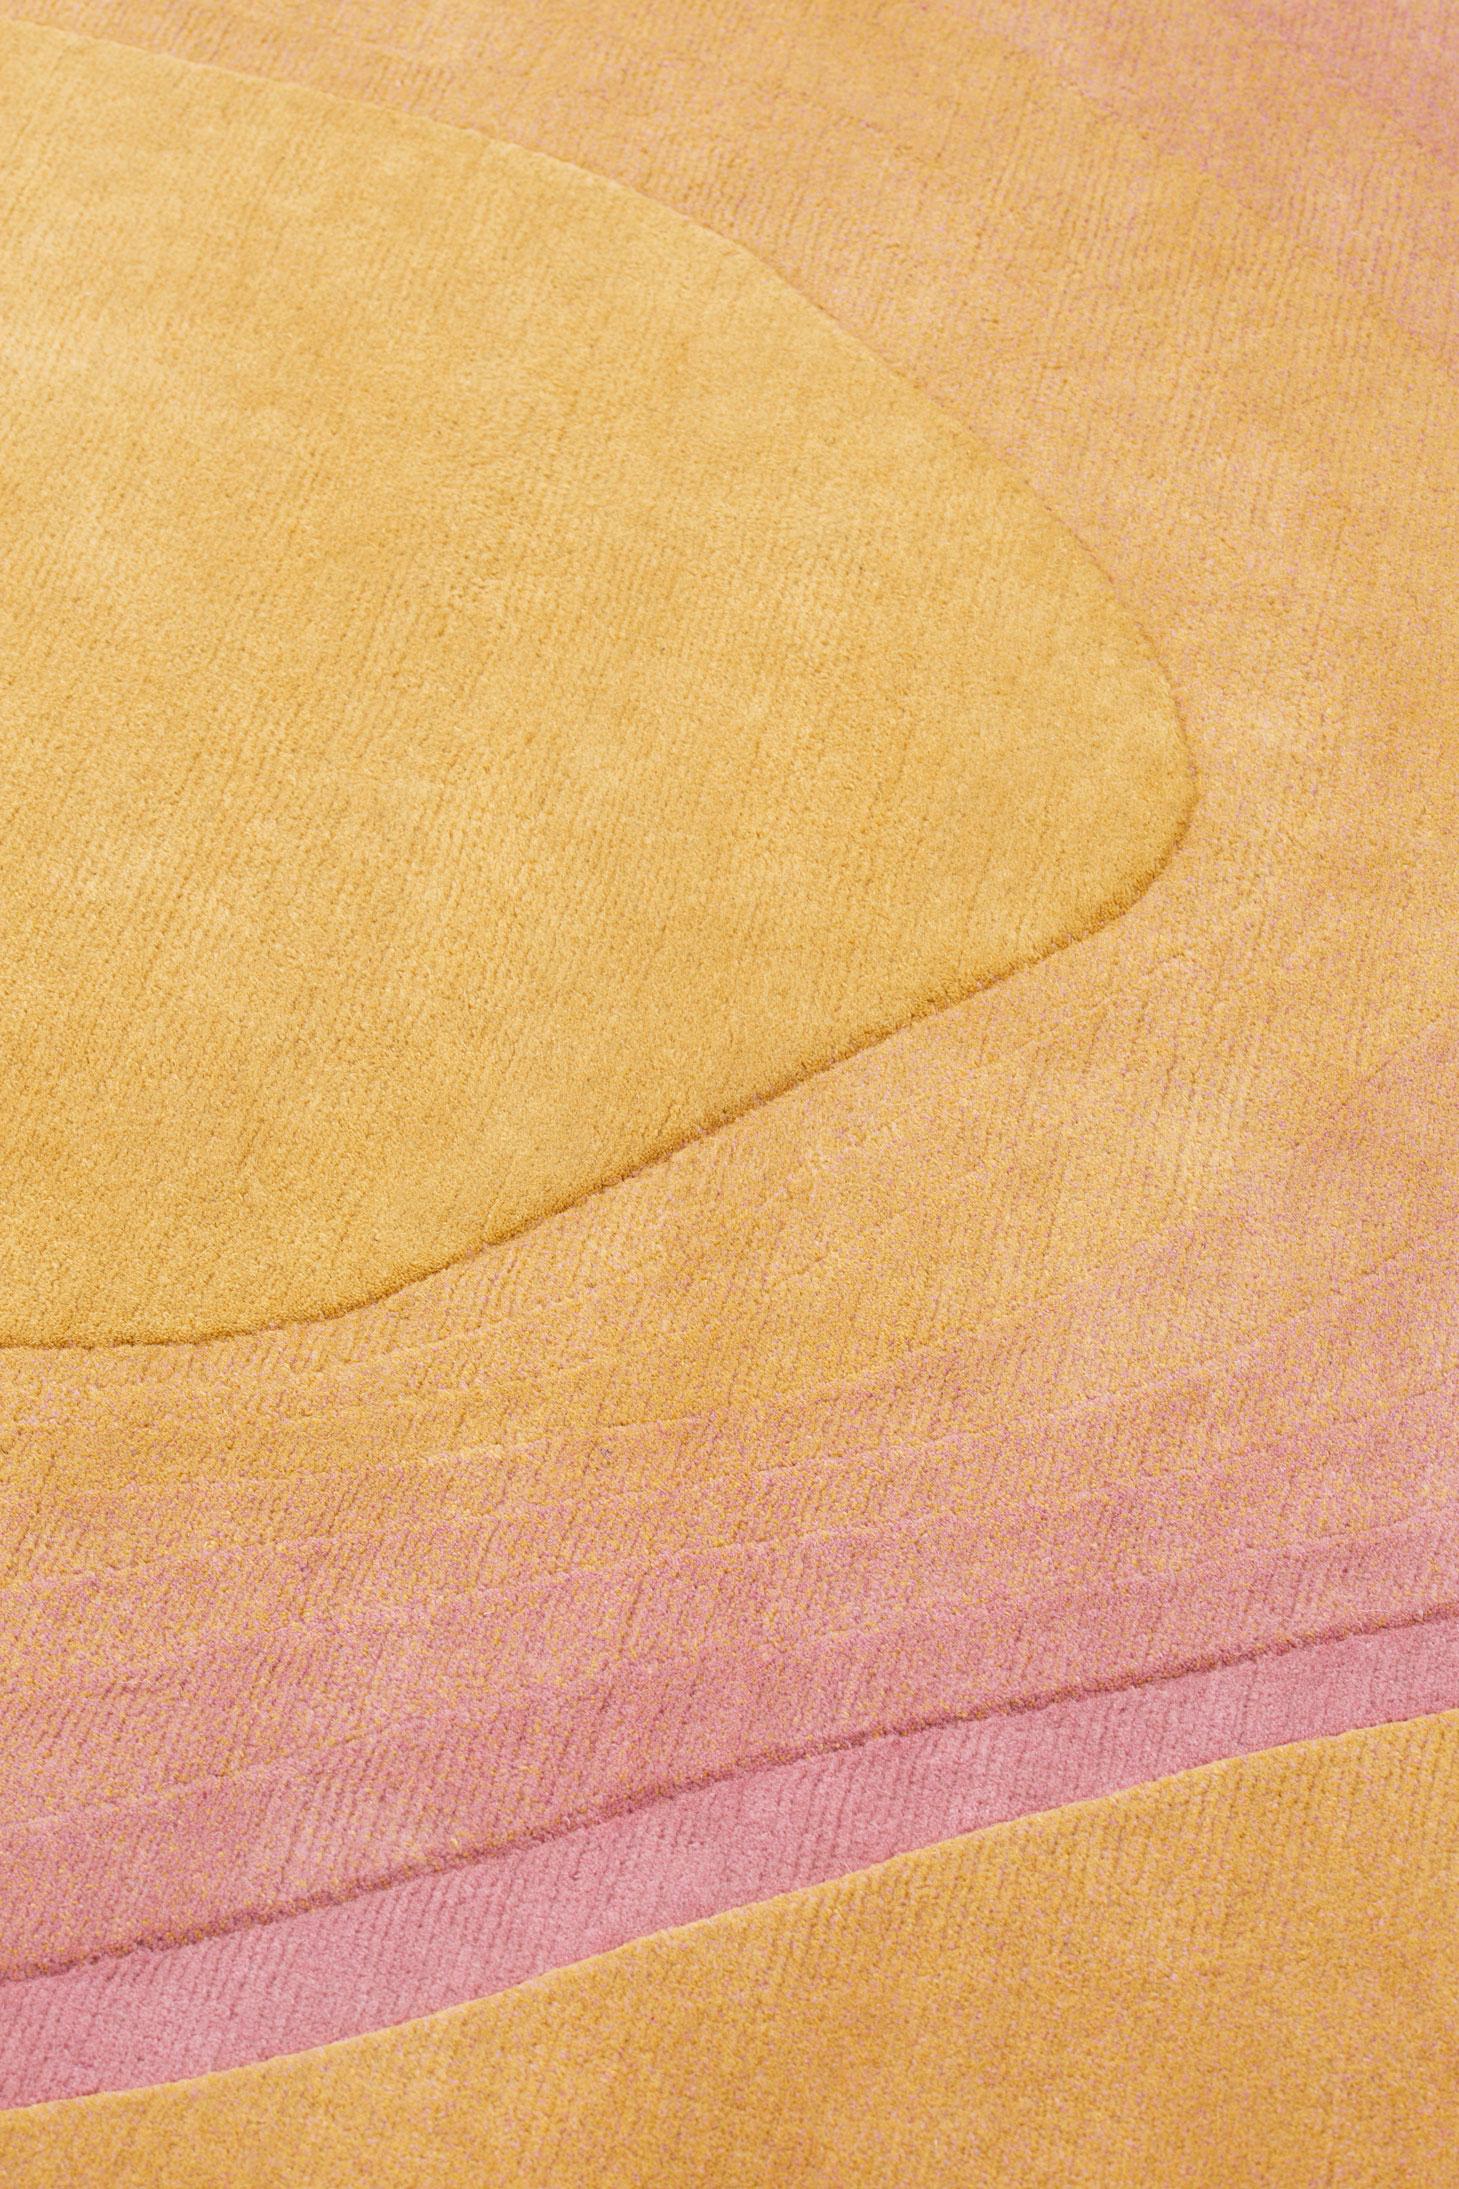 cc-tapis Chroma Radiate Yellow Pink Round Rug by Germans Ermičs Neuf - En vente à Brooklyn, NY